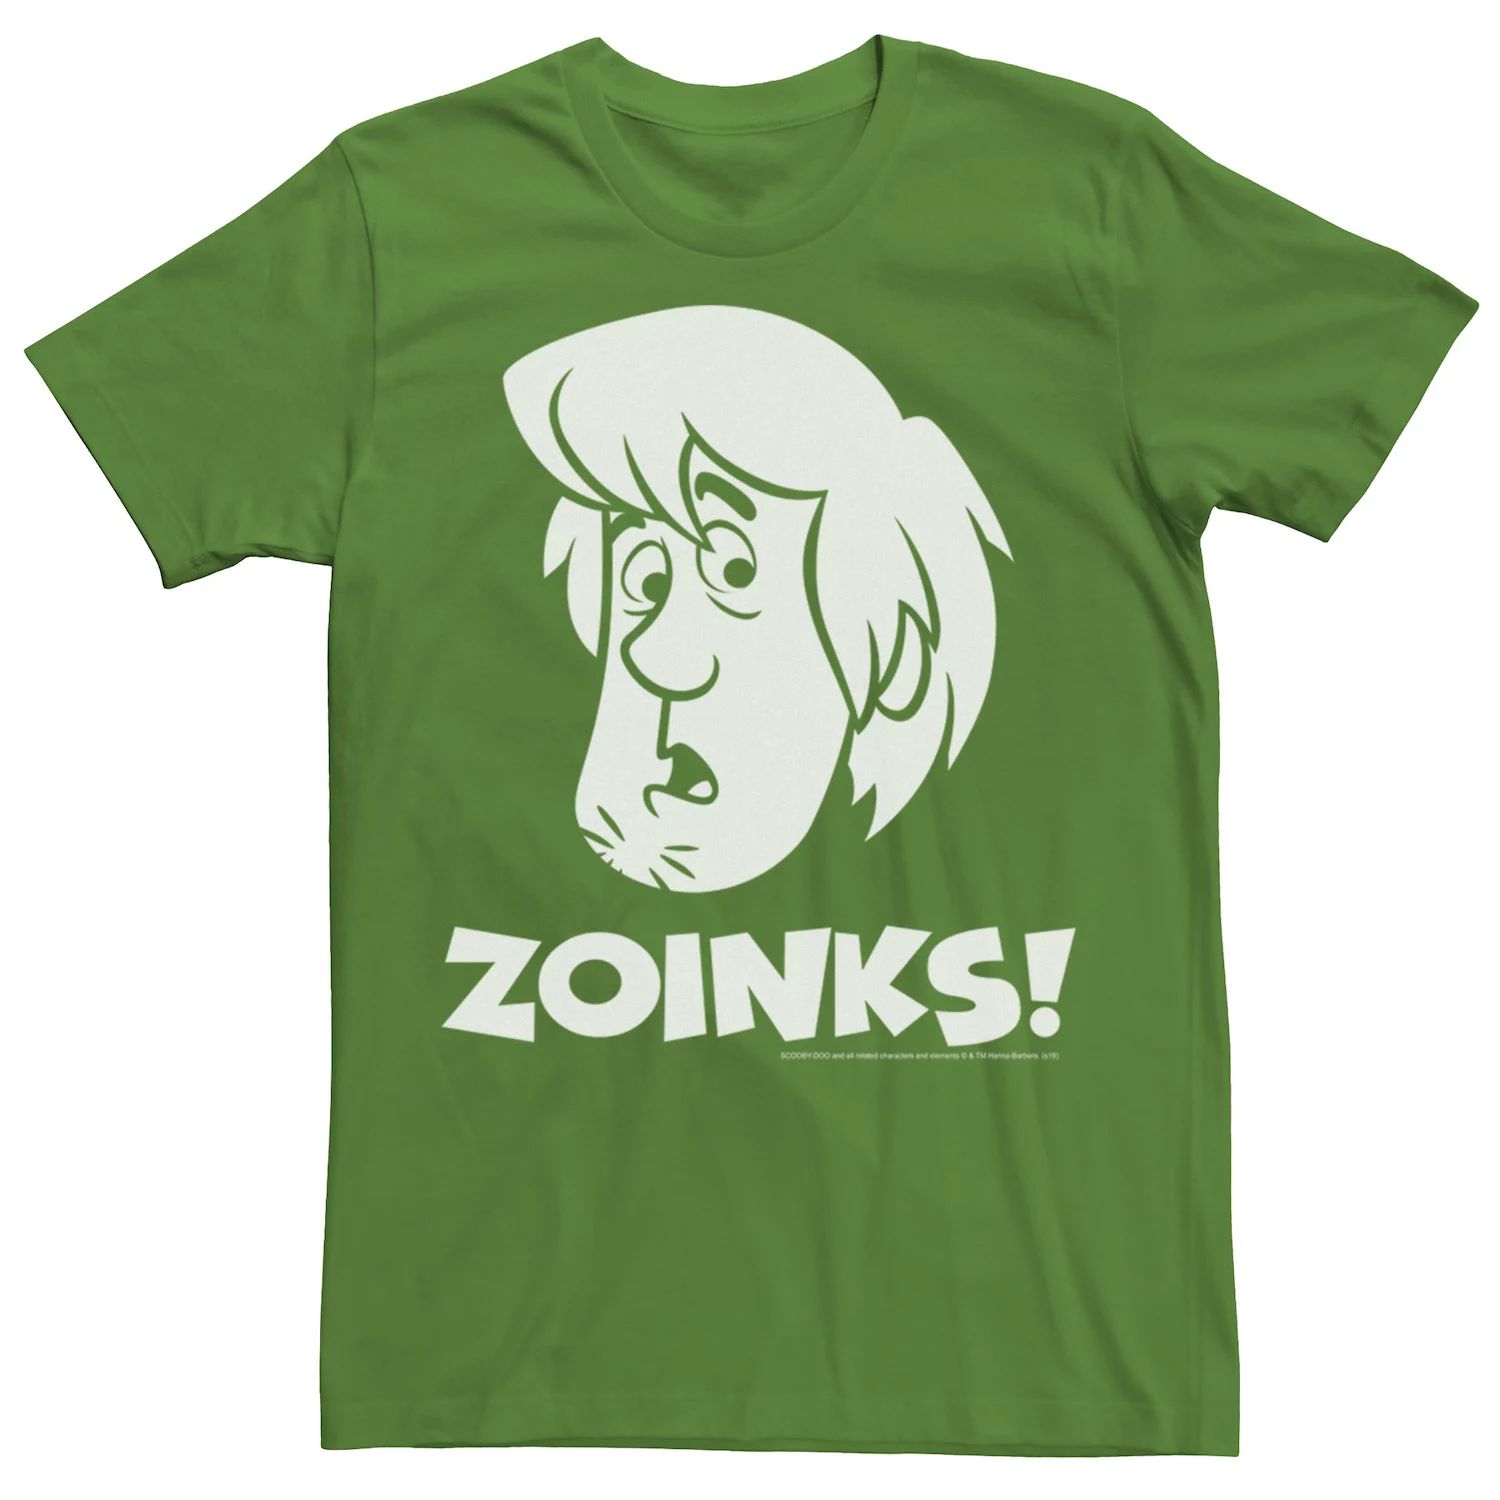 Мужская футболка Scooby-Doo Shaggy Zoinks с большим лицом Licensed Character мужская футболка с коротким рукавом scaredy shaggy zoinks scooby doo fifth sun черный